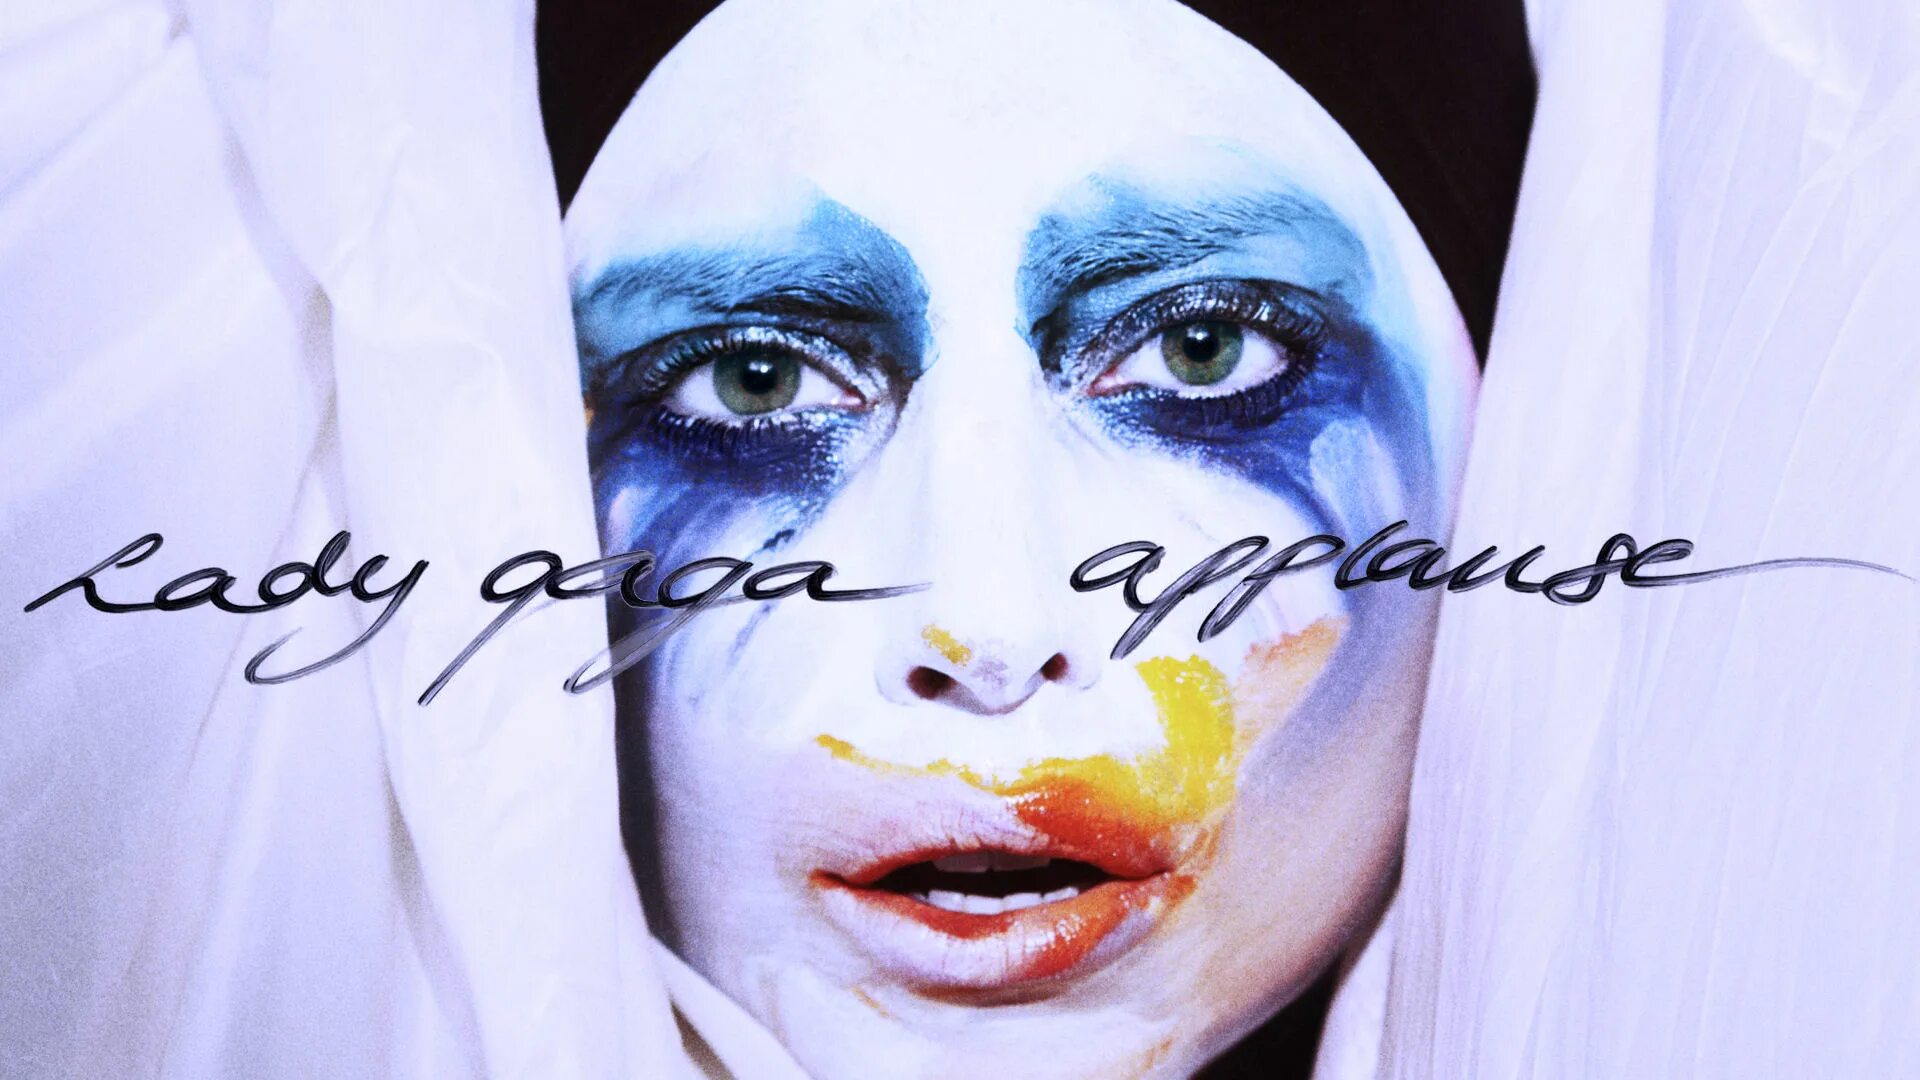 Applause леди гага. Леди Гага Applause. Lady Gaga Applause обложка. Lady Gaga Applause арт. Applause леди Гага рисунок.